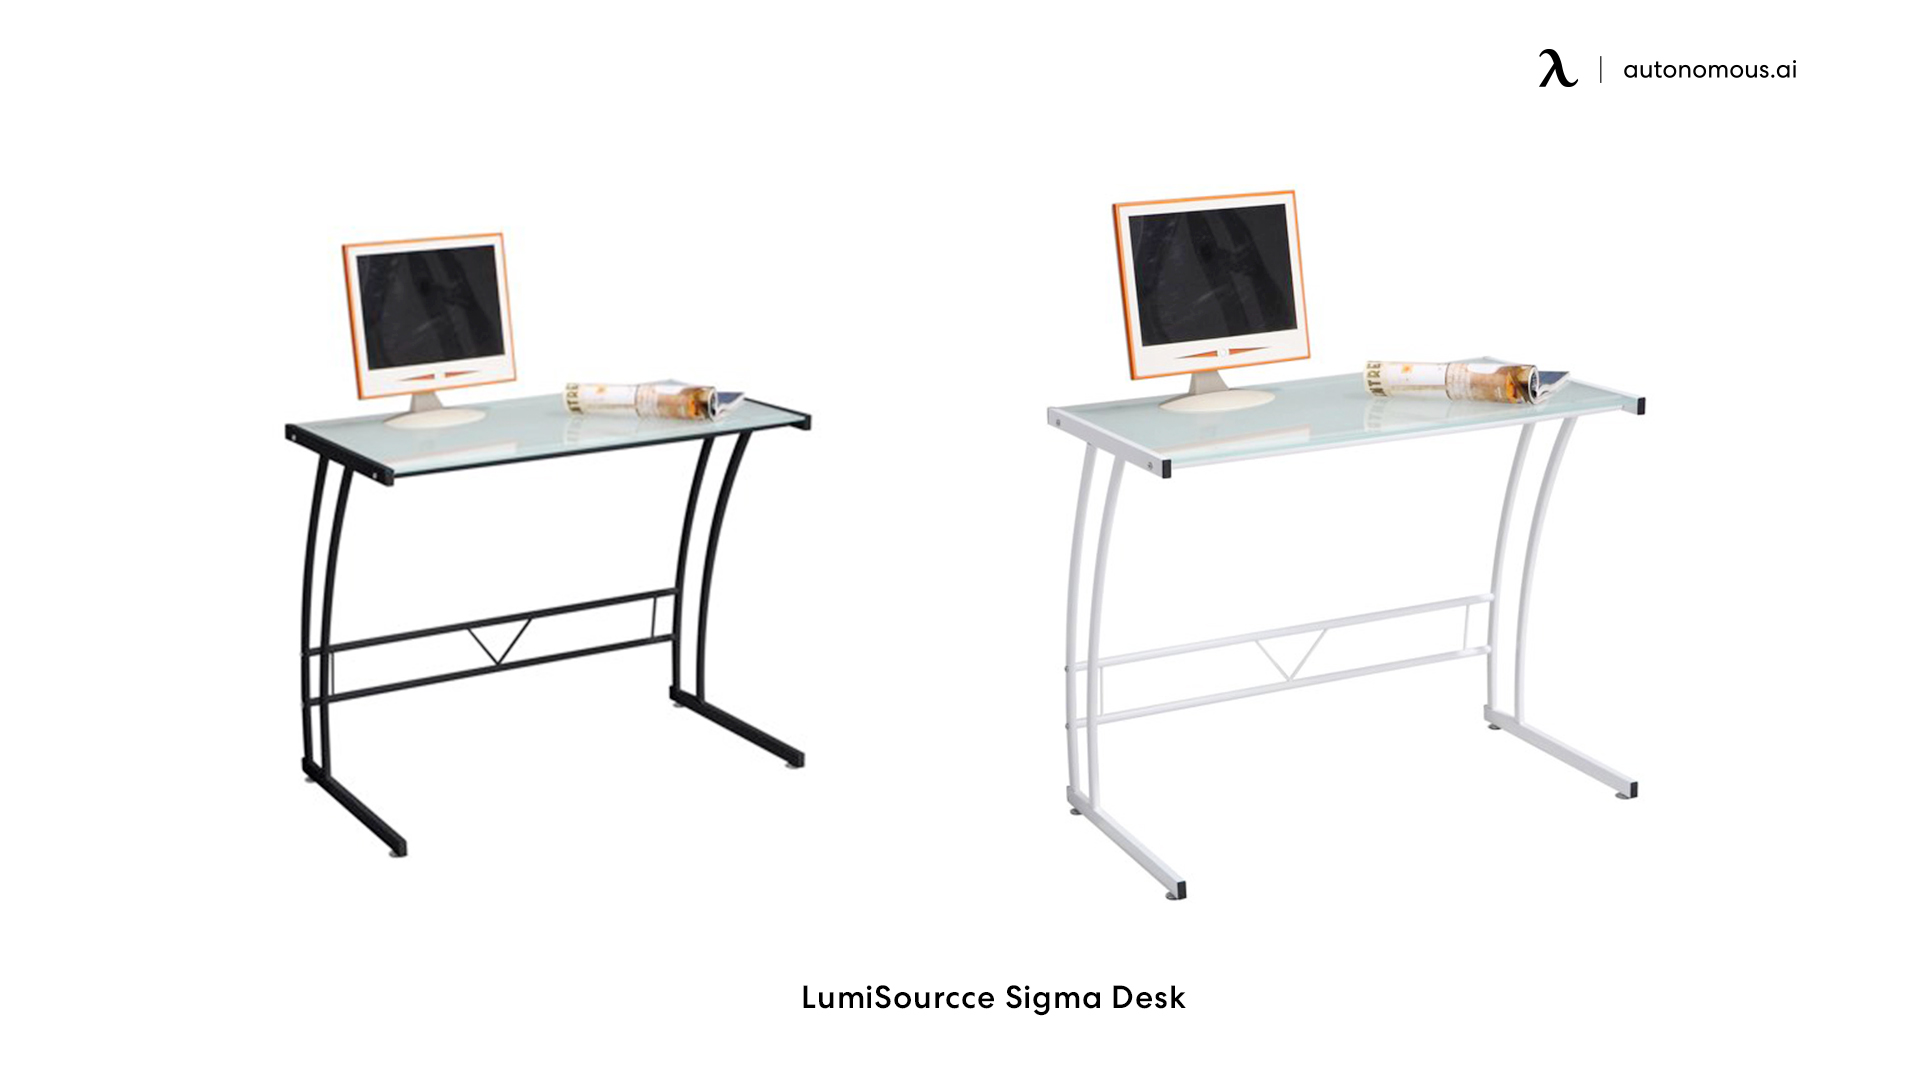 LumiSourcce Sigma homeschool desk